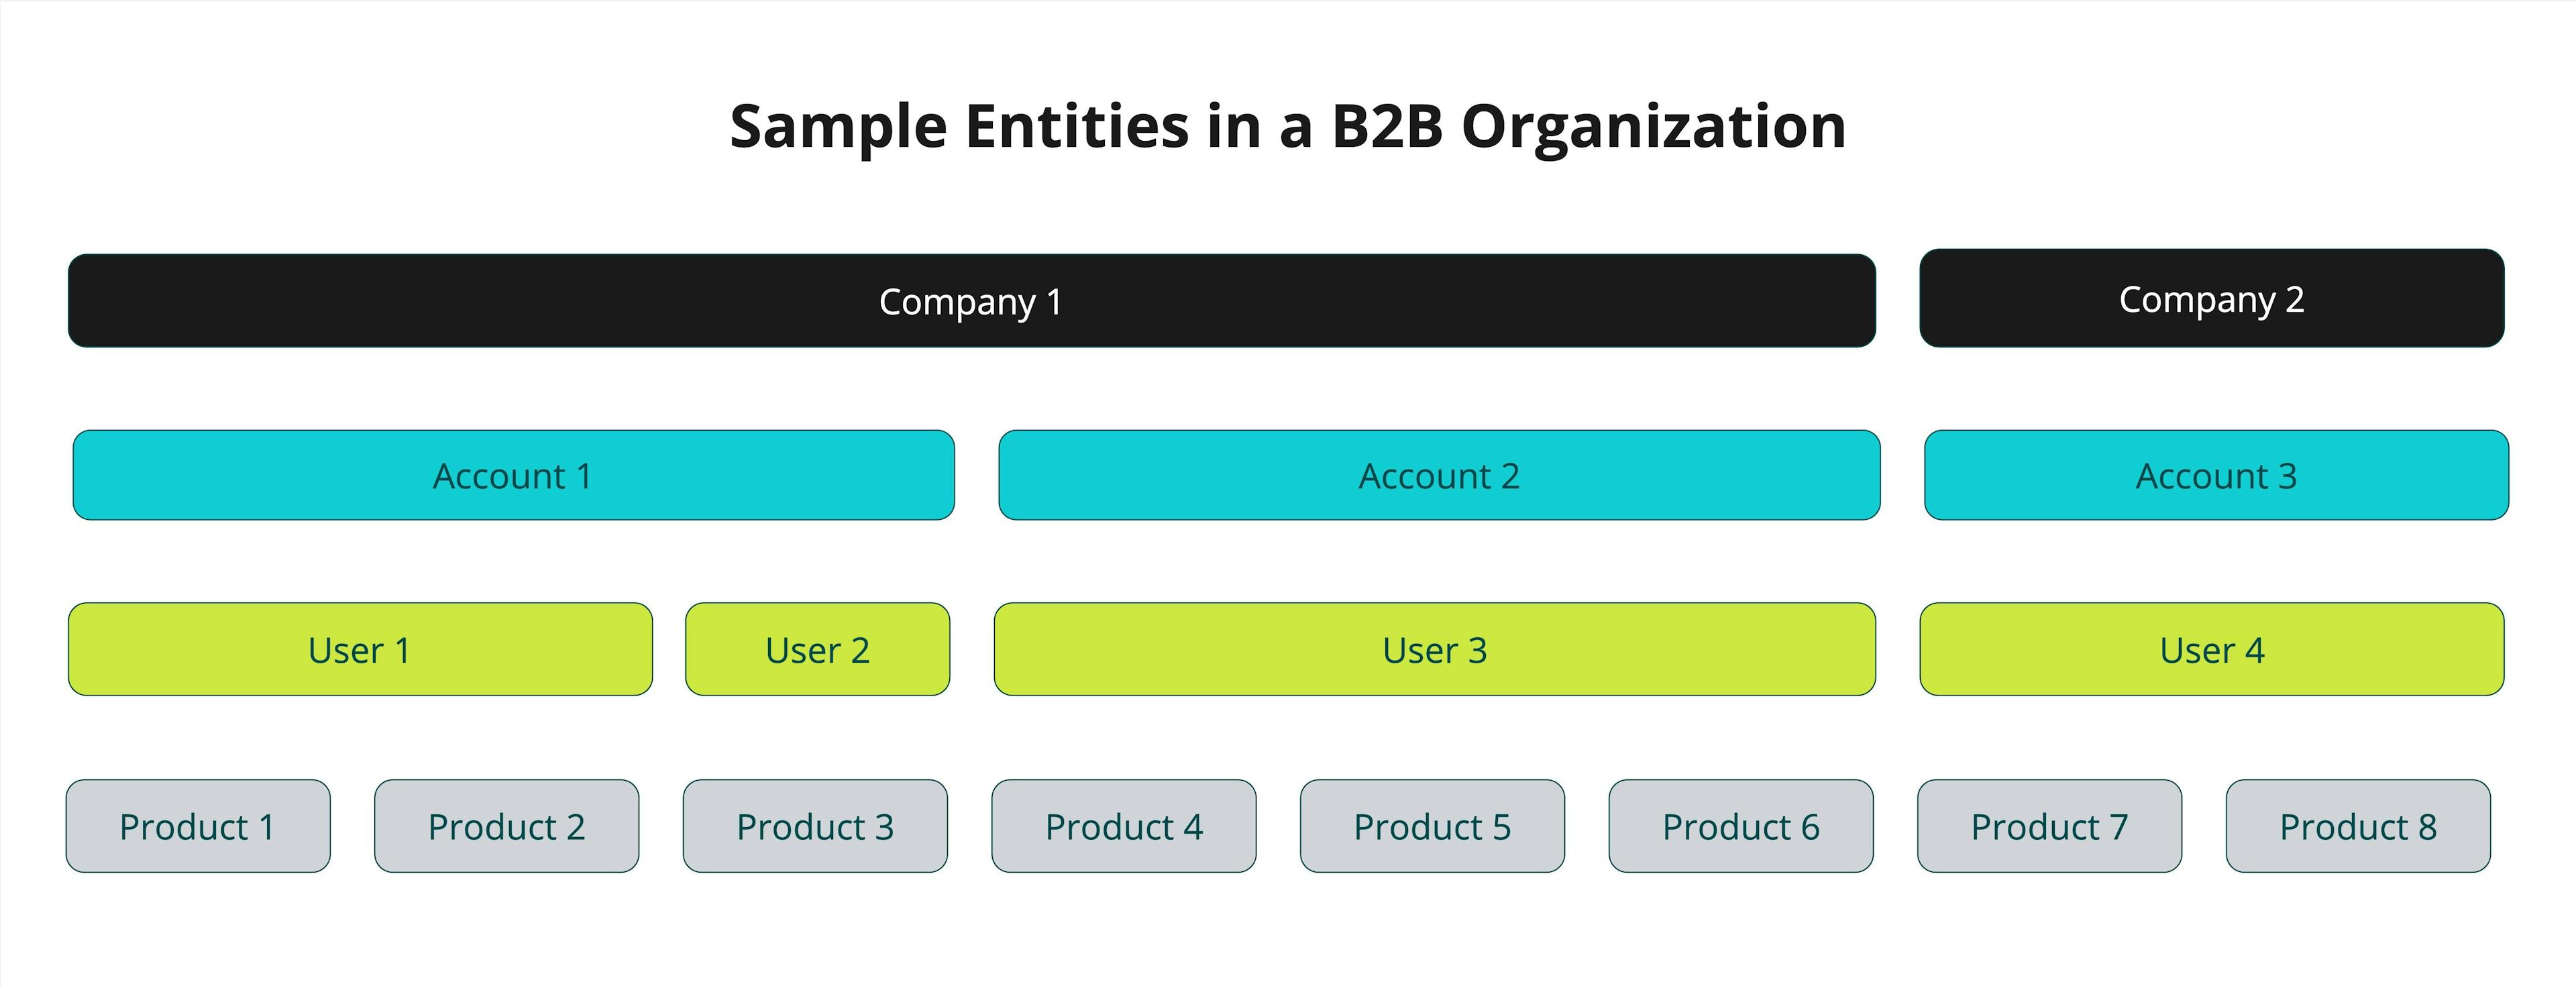 Sample entities in a B2B organization